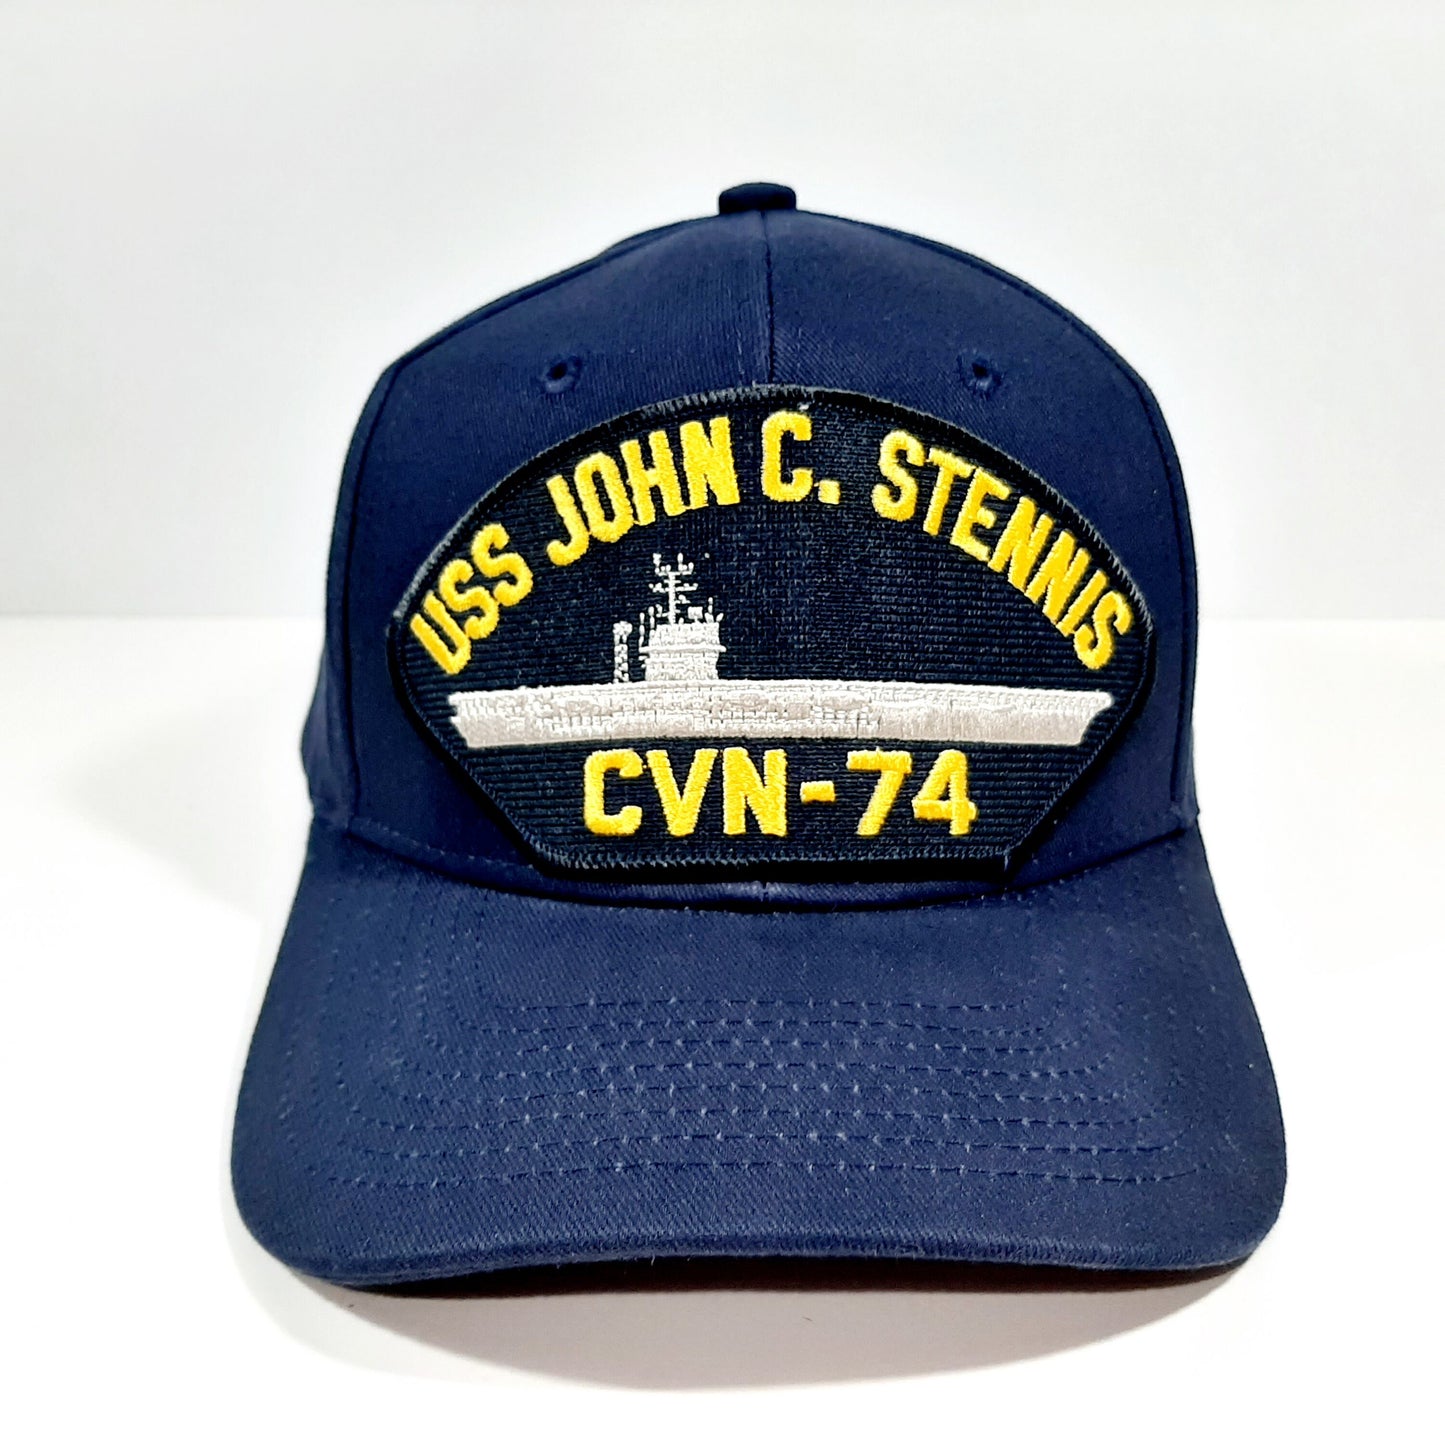 USS John C. Stennis Embroidered Patch Hat Baseball Cap Adjustable Blue